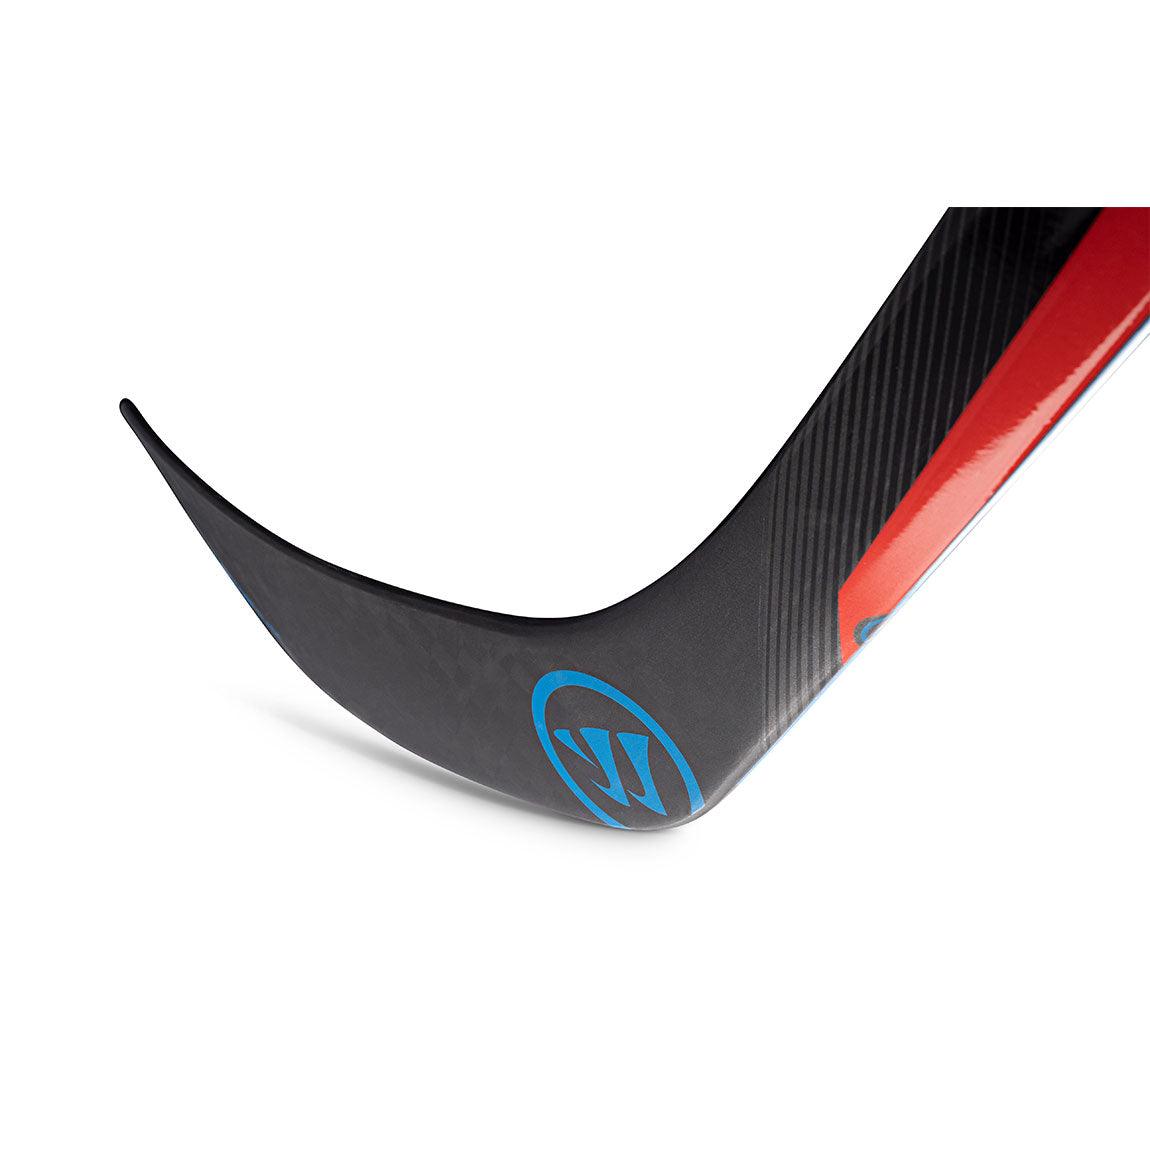 Snipe Pro Hockey Stick - Junior - Sports Excellence